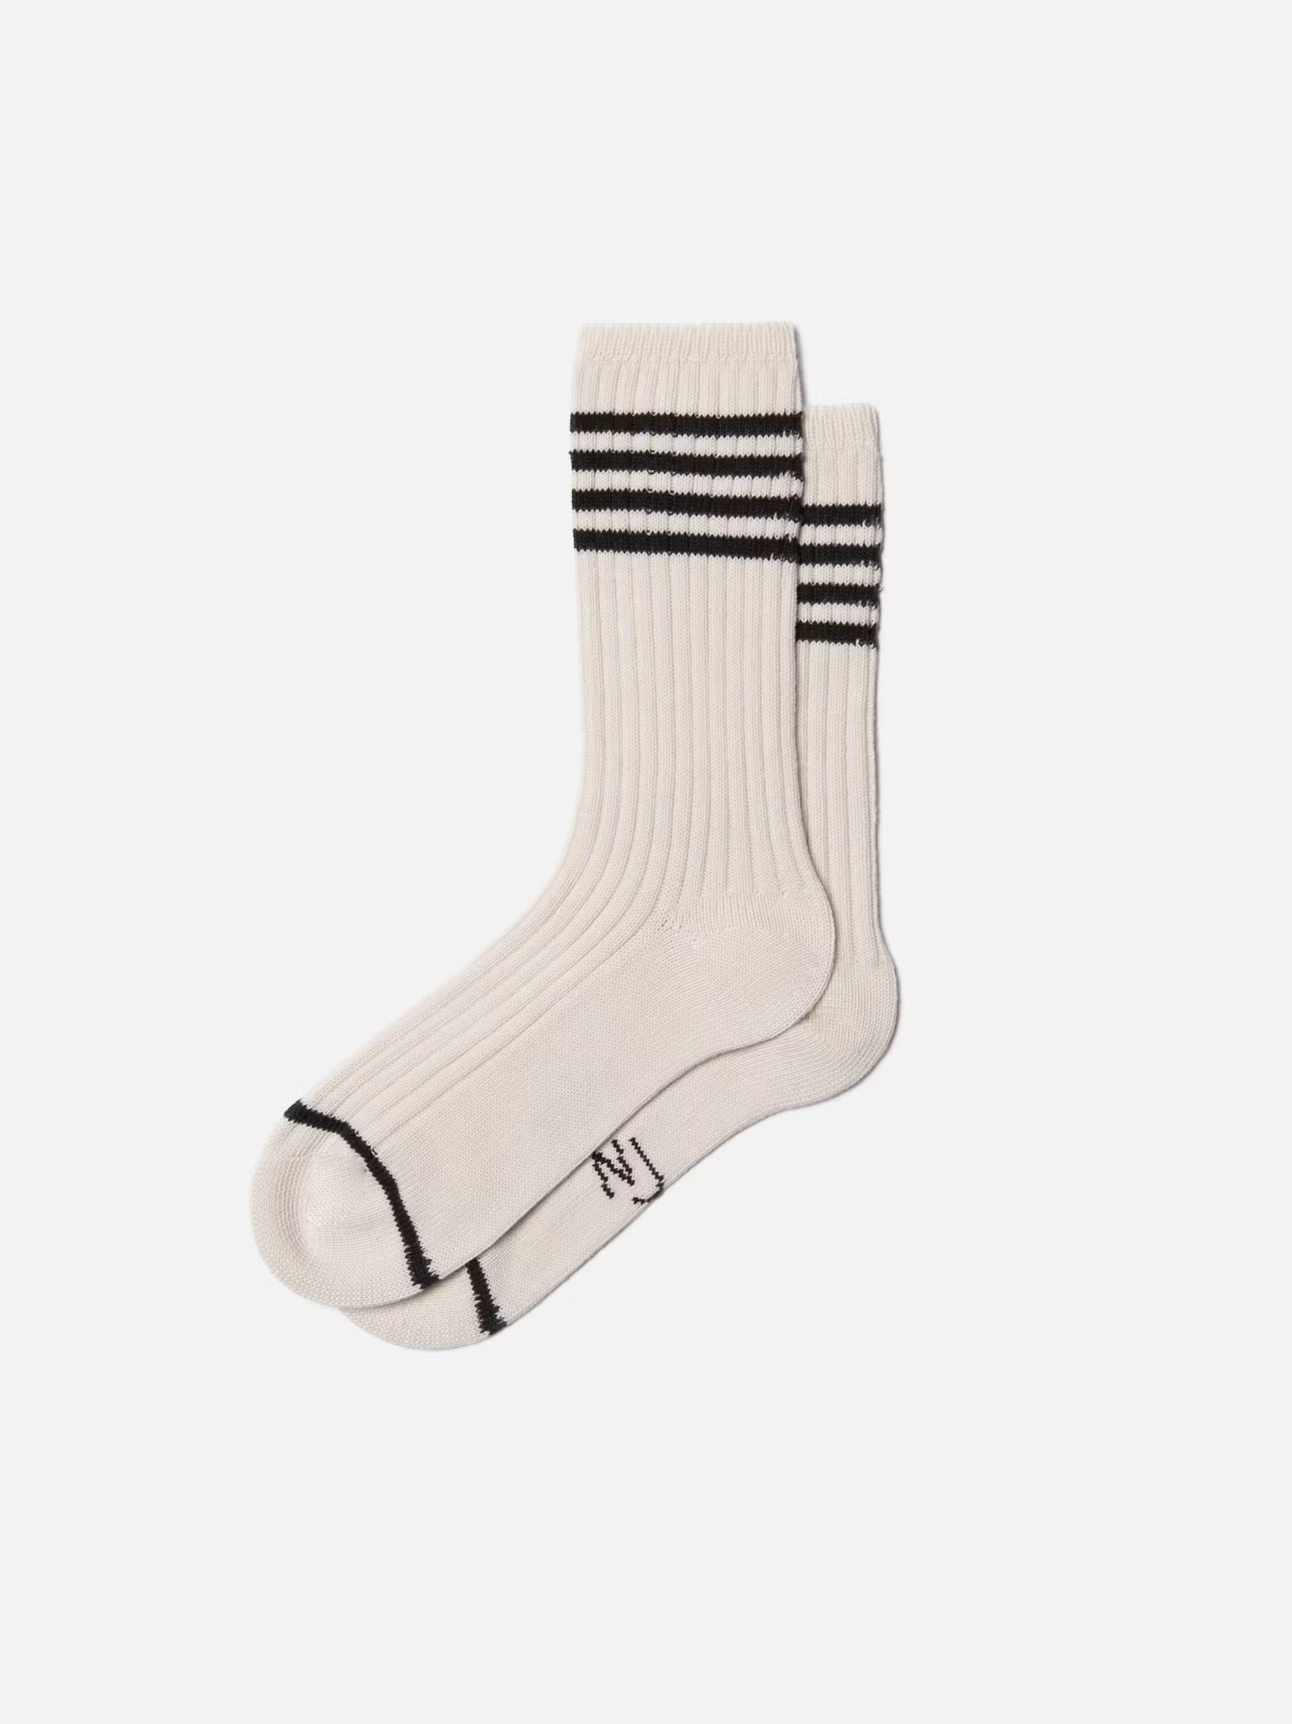 Mens Tennis Socks - Stripe